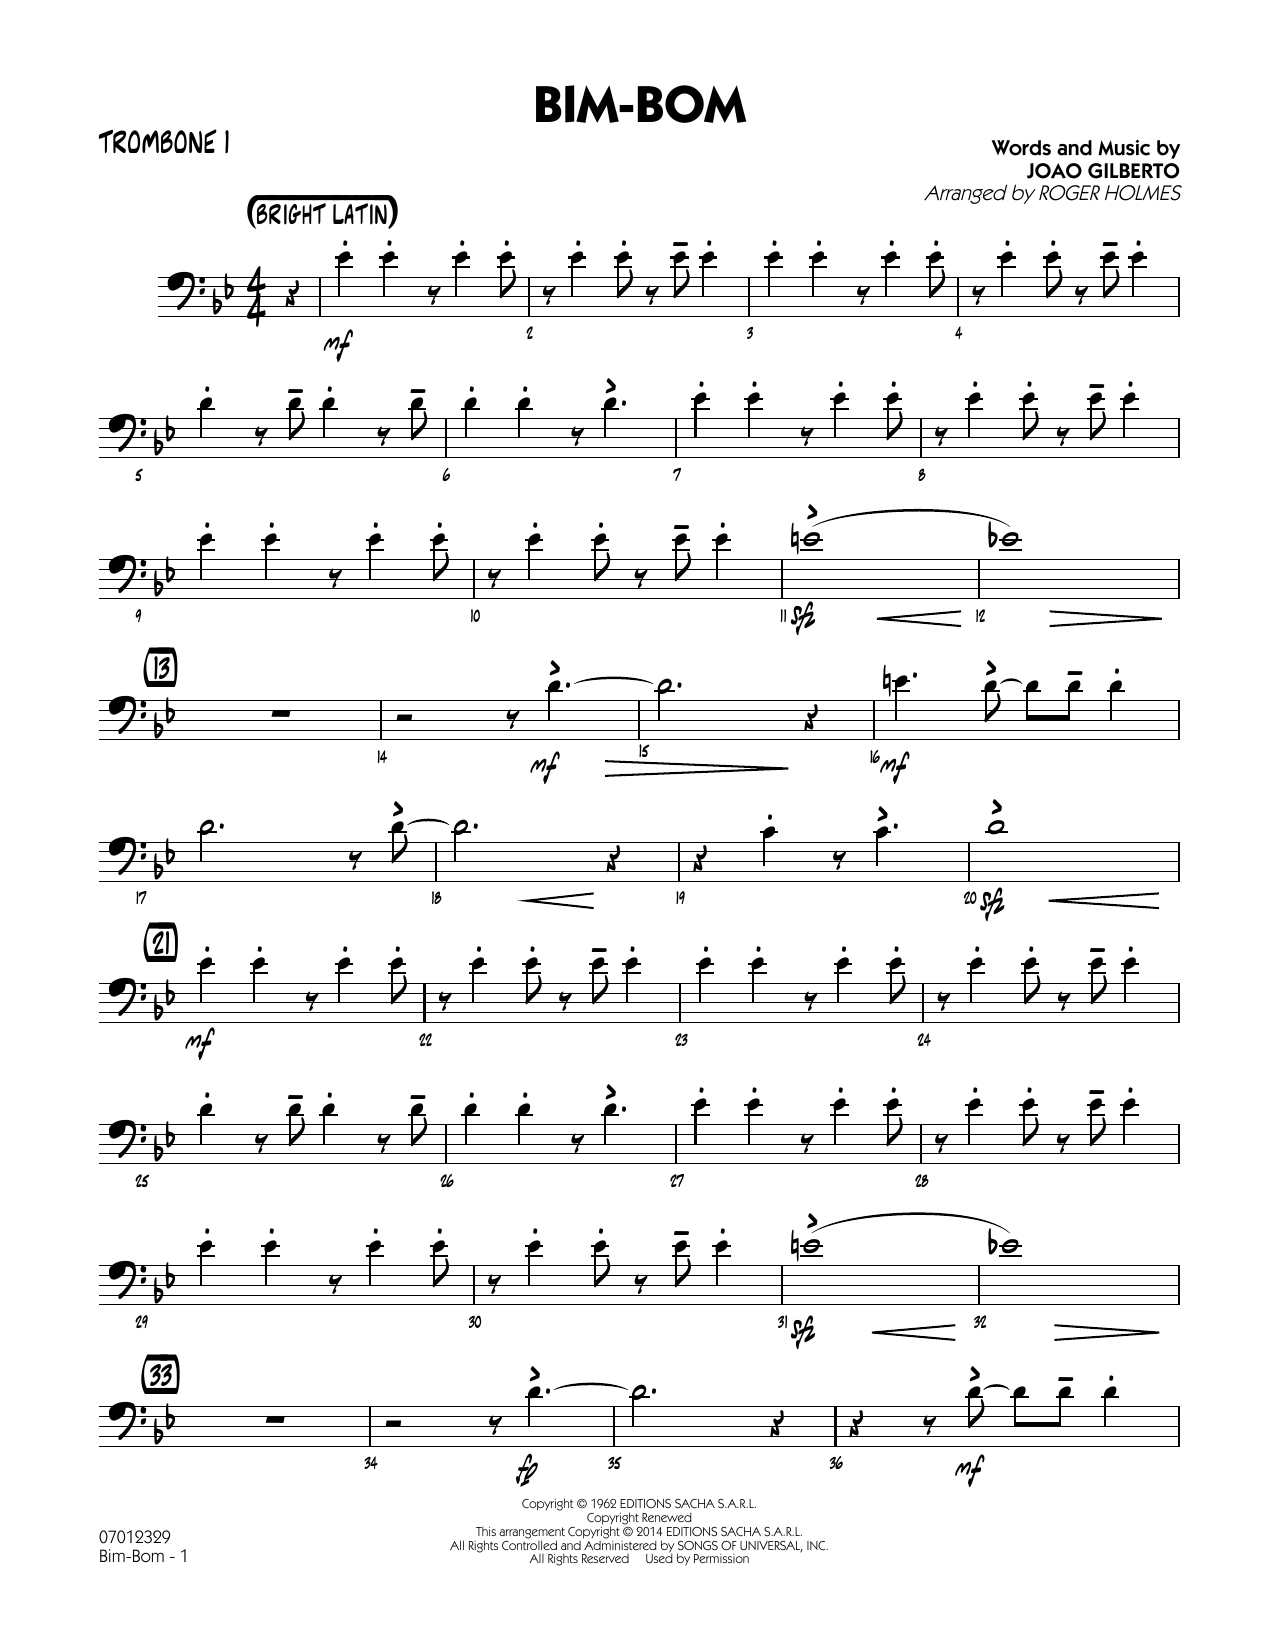 Roger Holmes Bim-Bom - Trombone 1 sheet music notes and chords. Download Printable PDF.